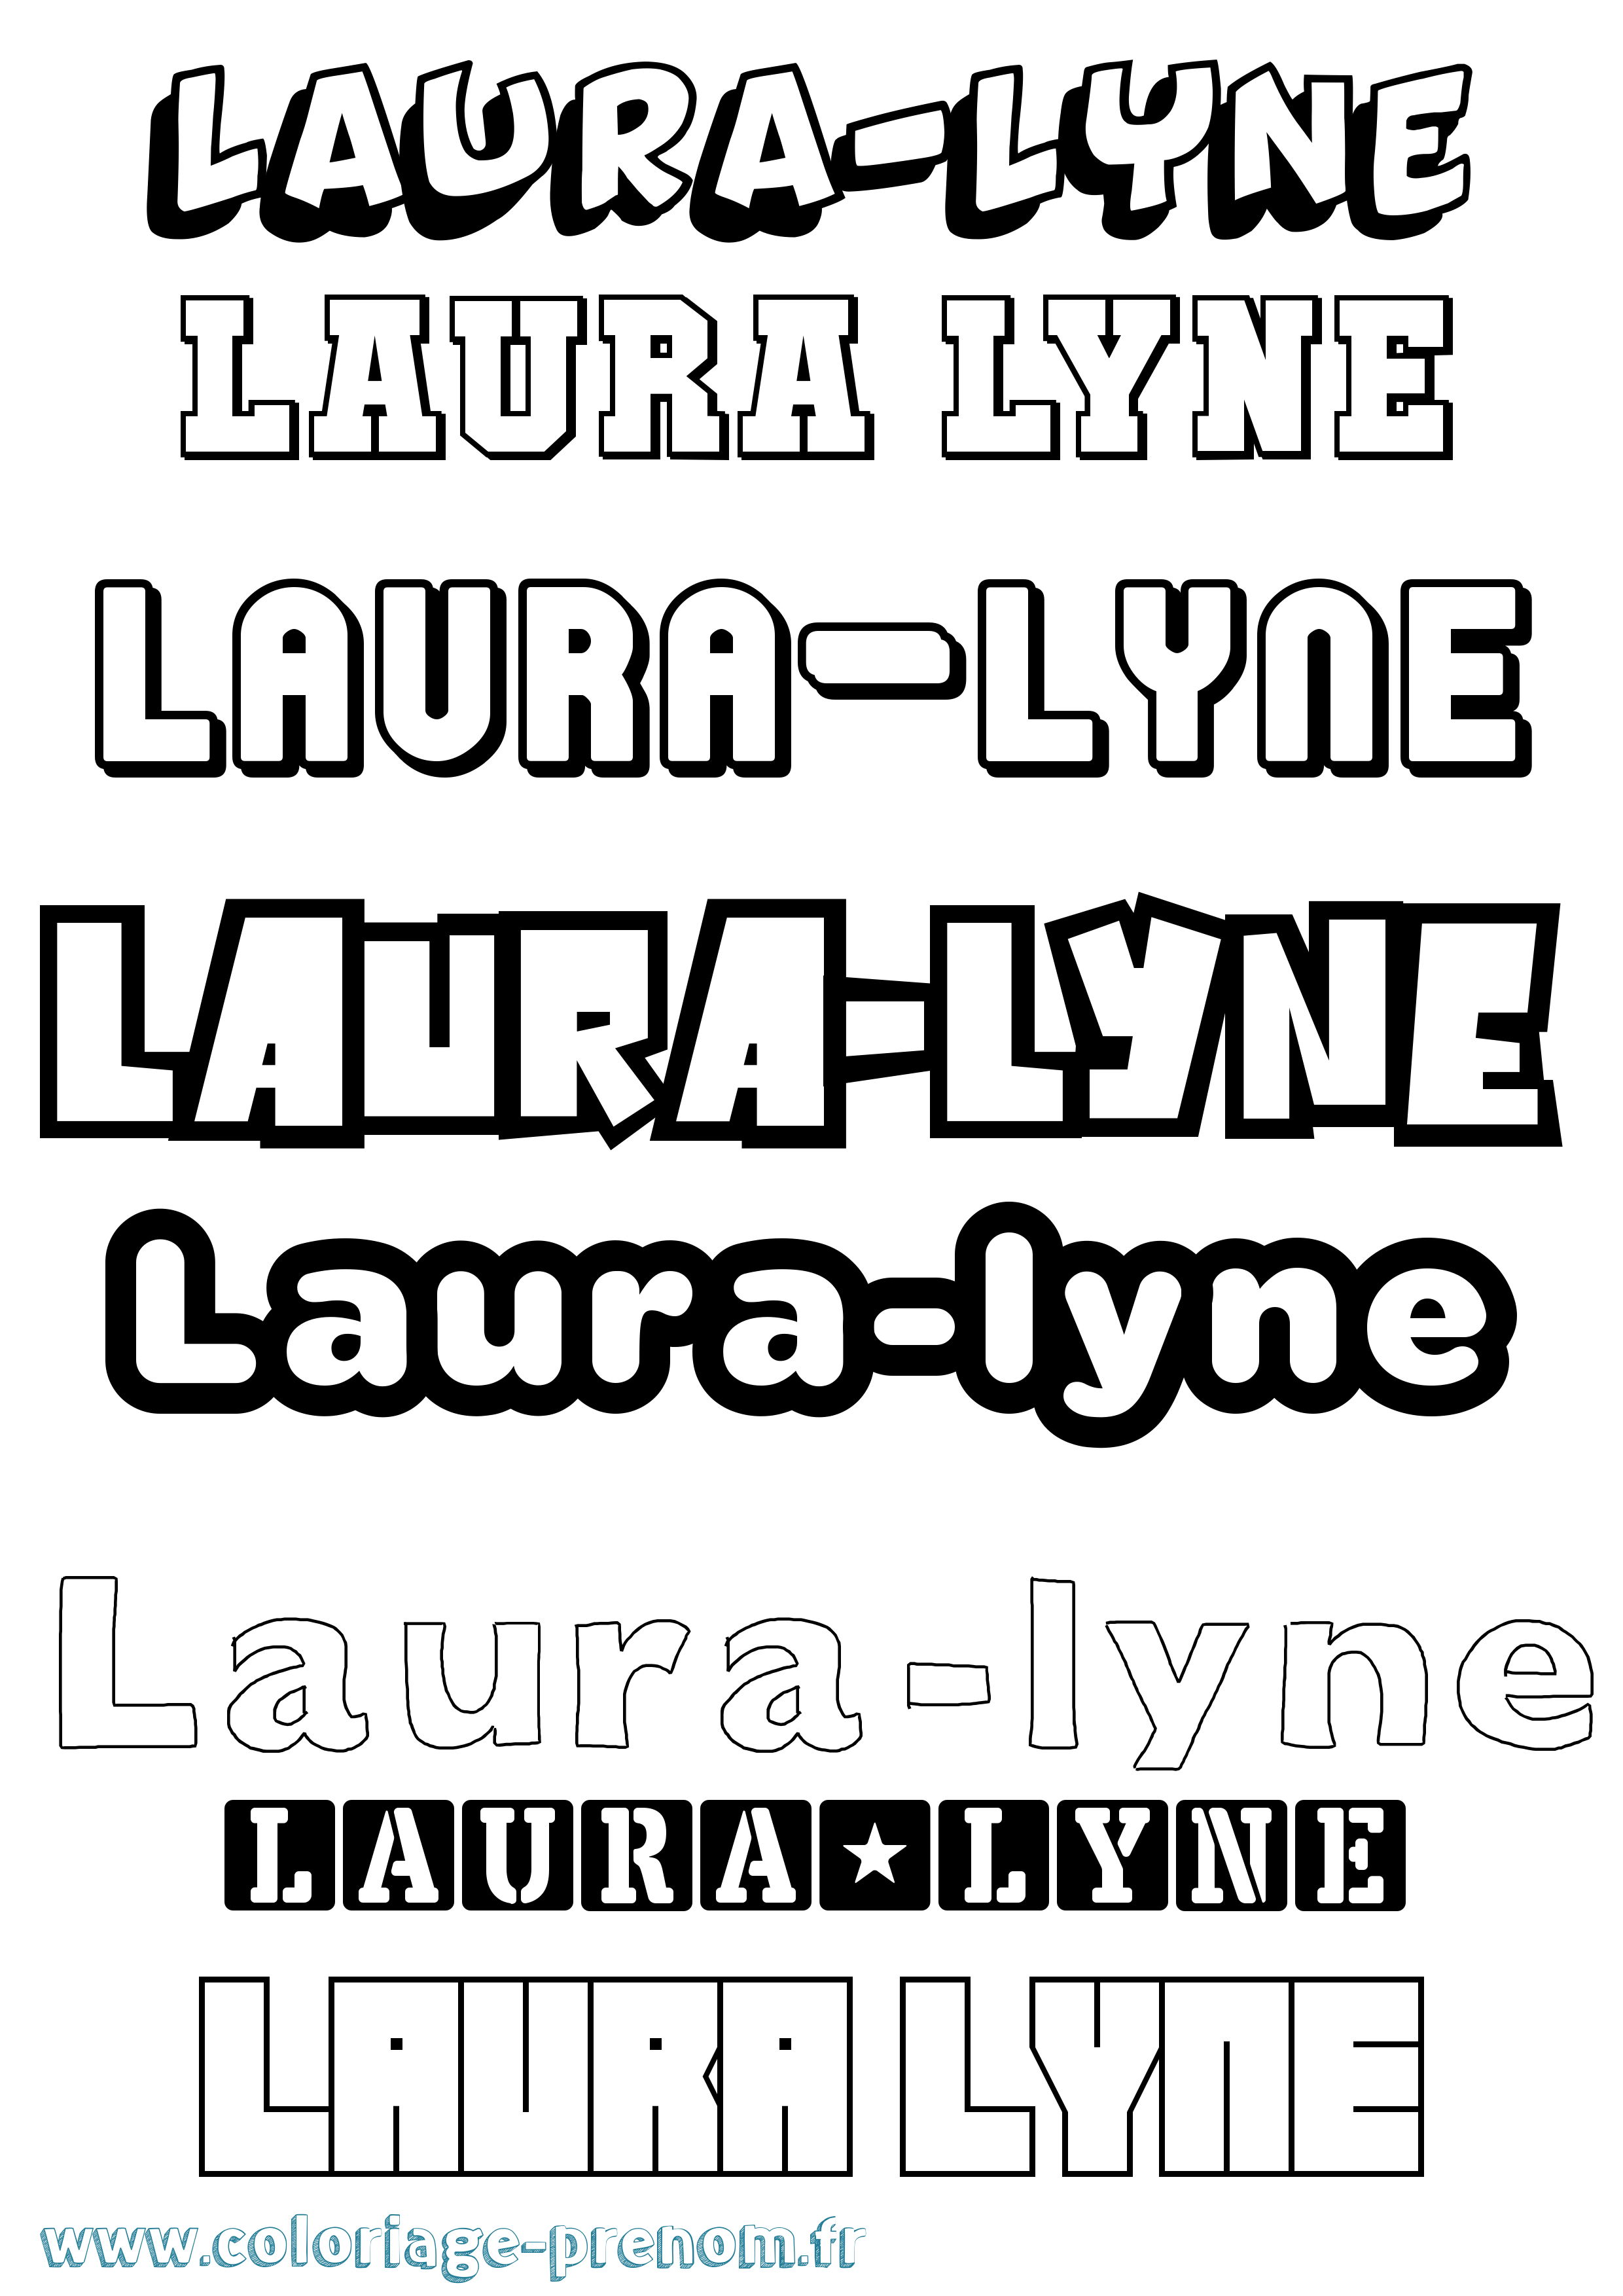 Coloriage prénom Laura-Lyne Simple